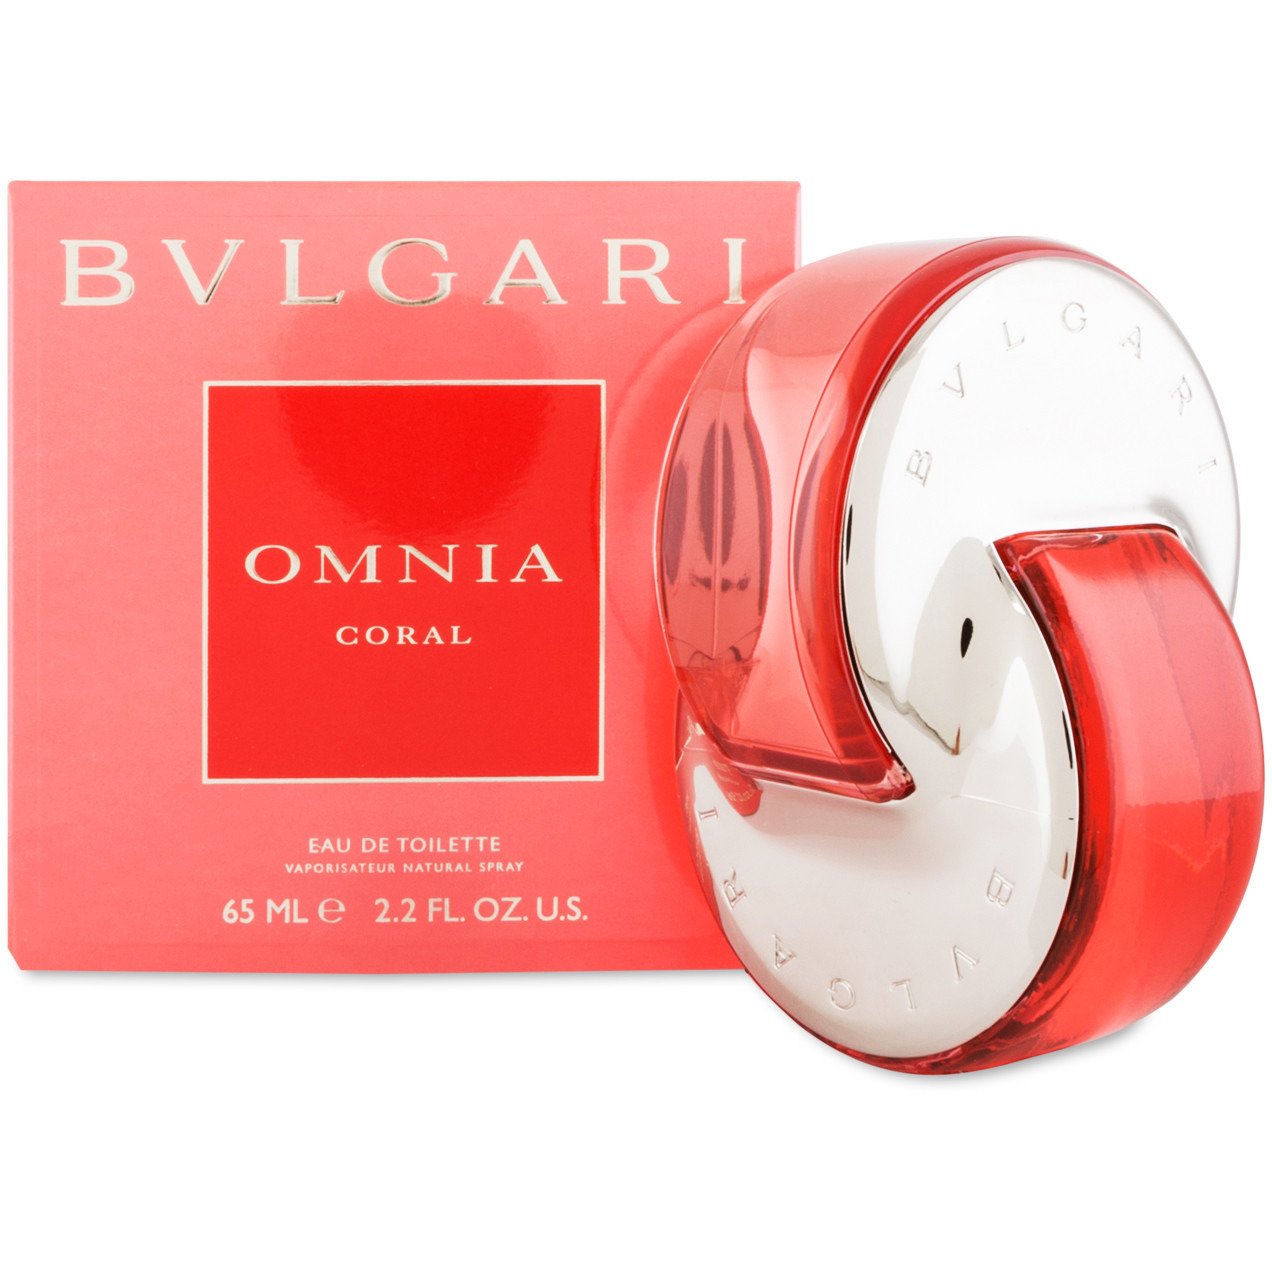 Bvlgari Omnia Coral EDT for Women, 65ml 